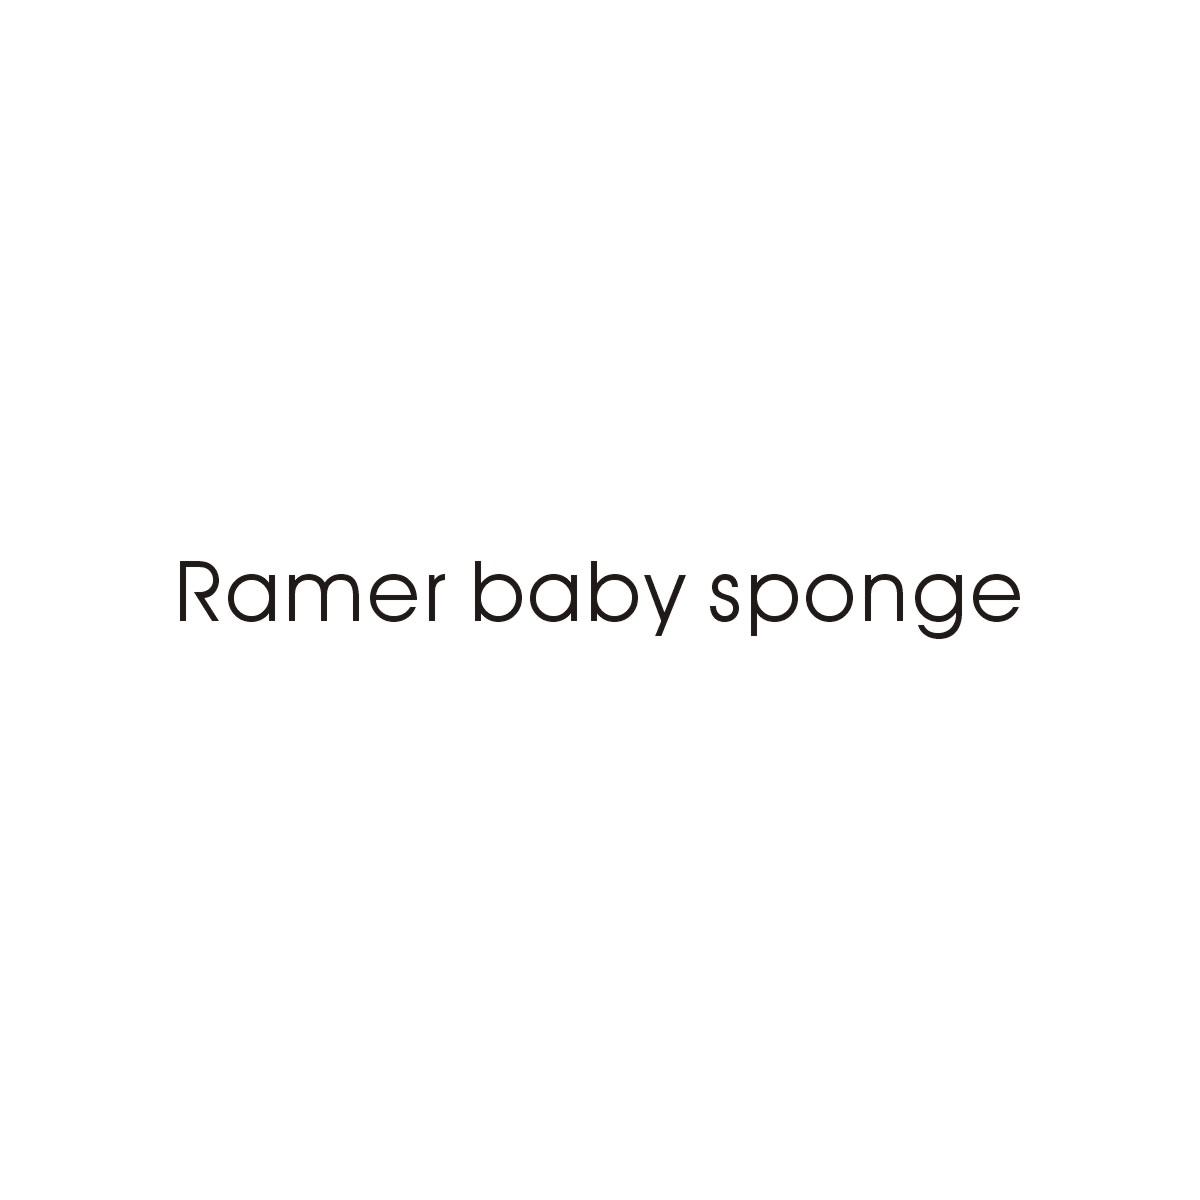 RAMER BABY SPONGE商标转让